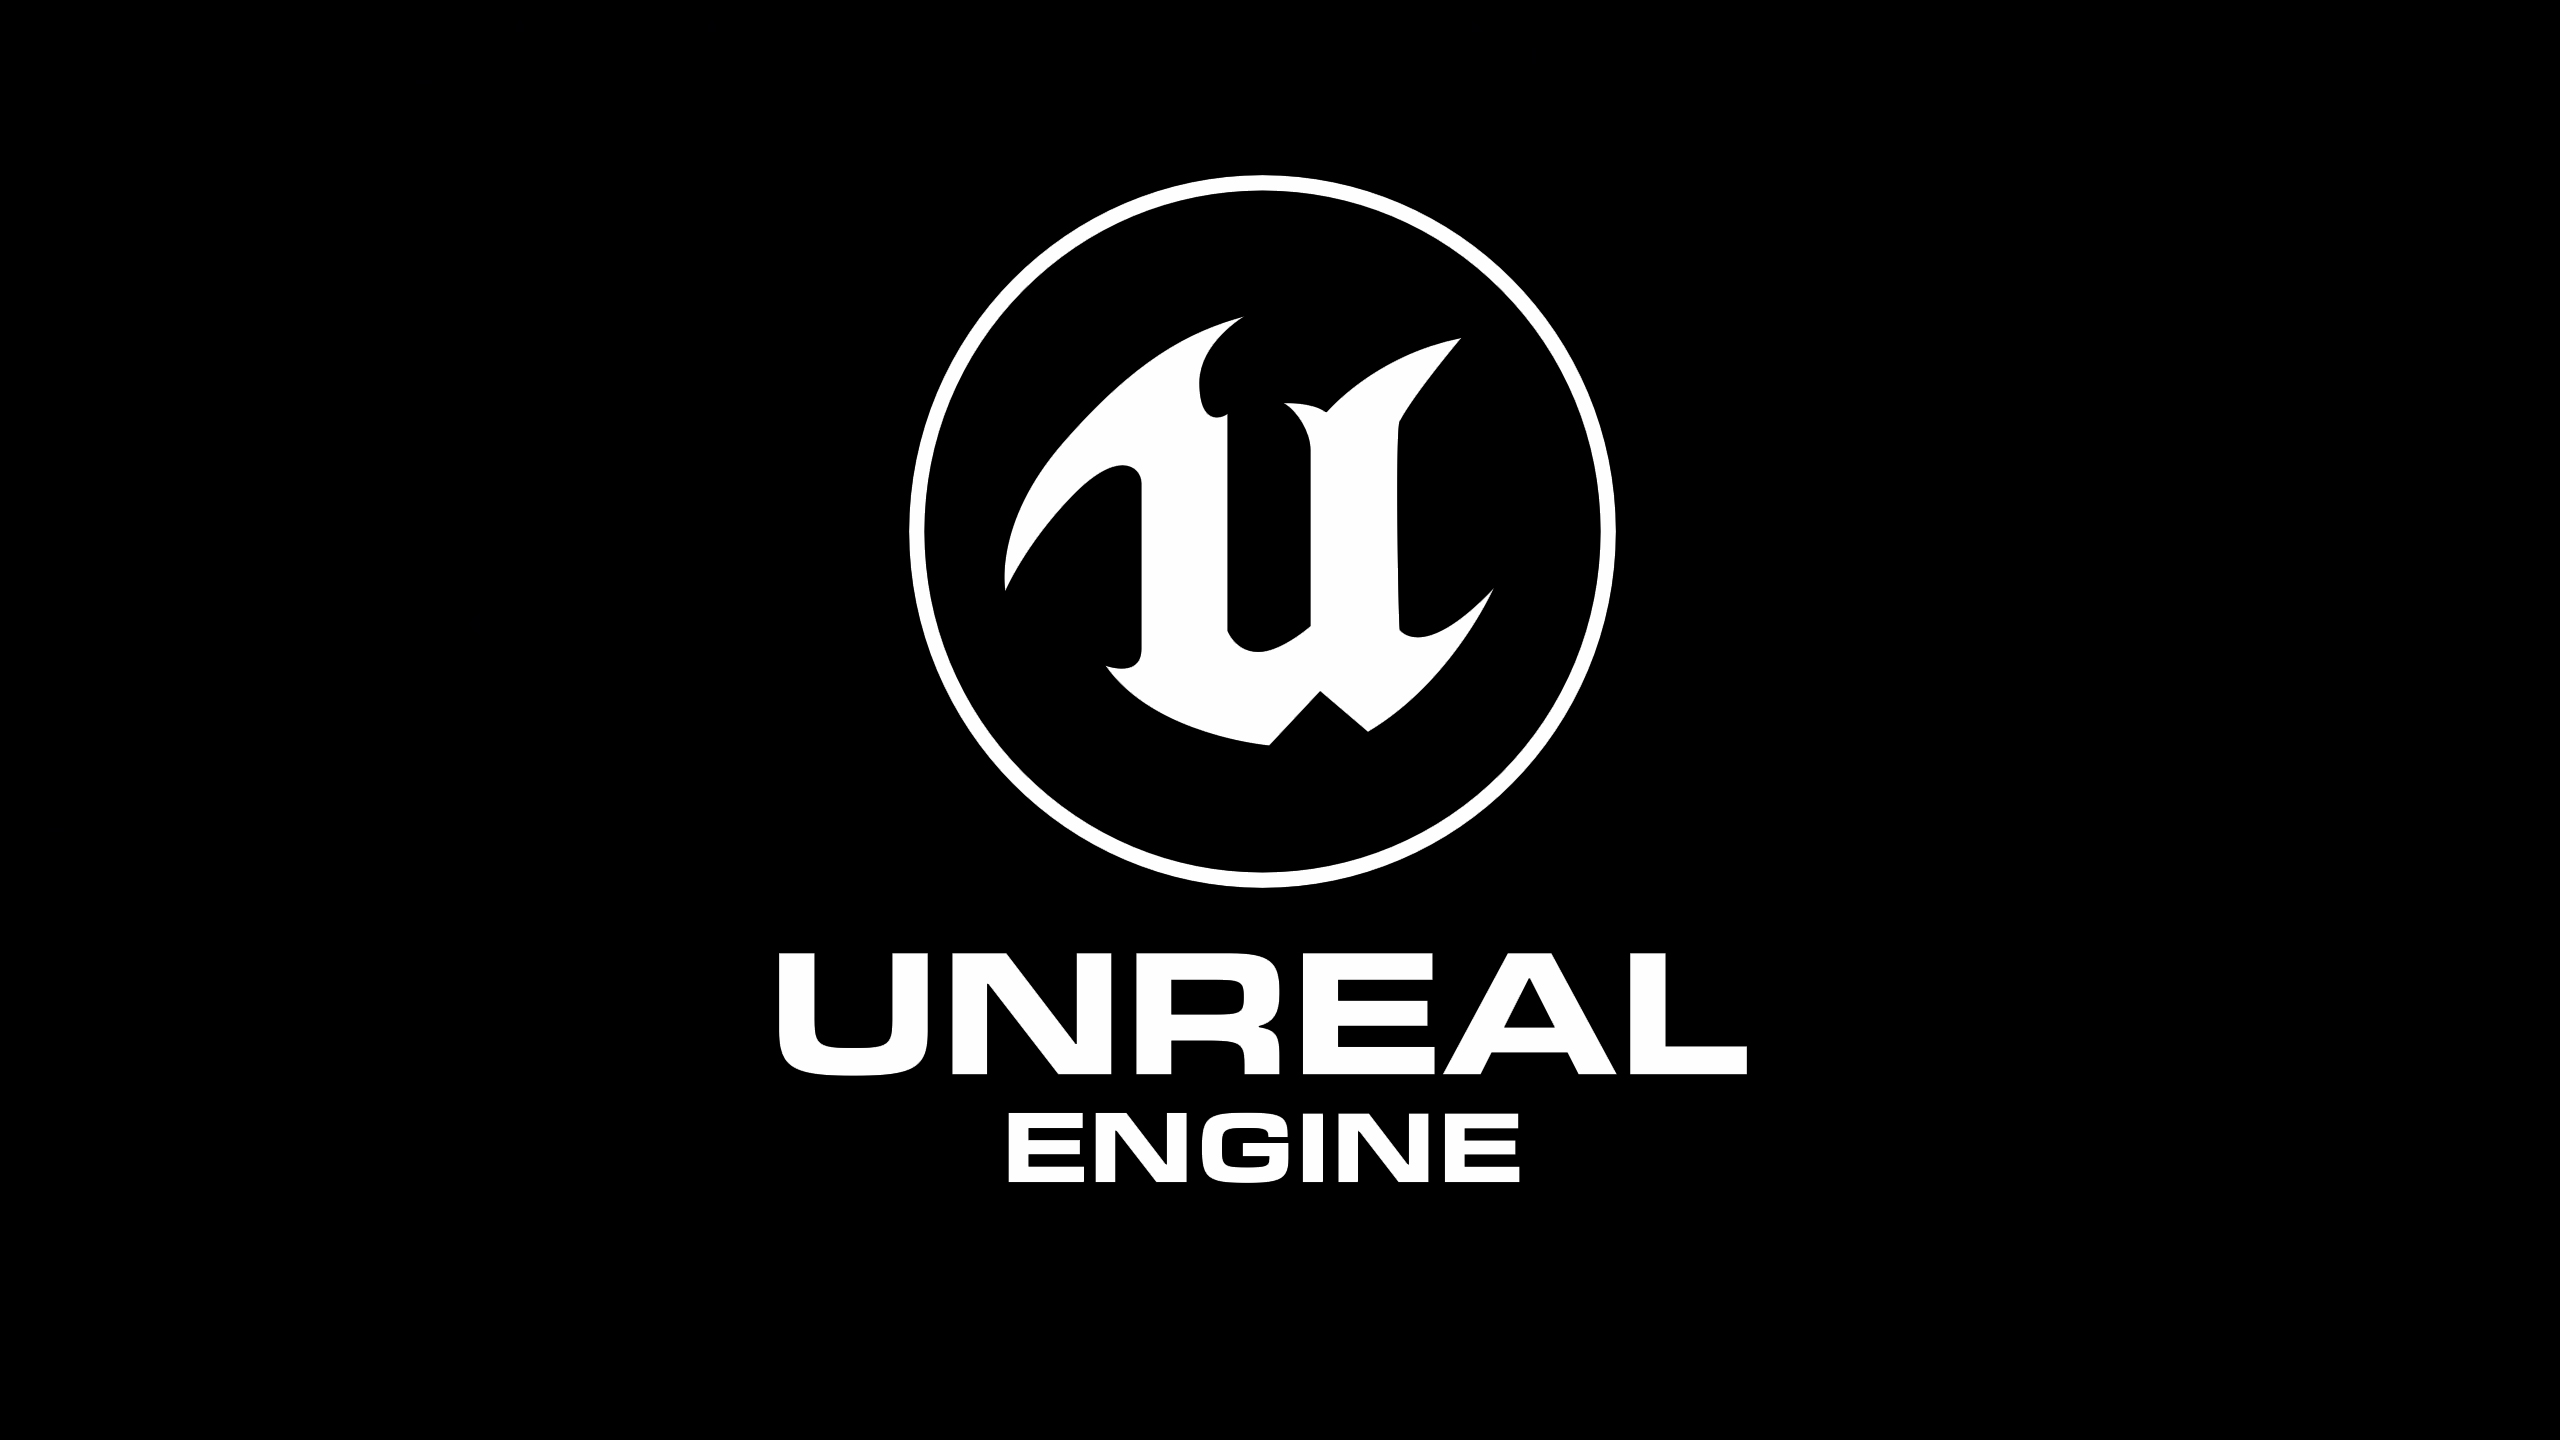 Unreal engine 4